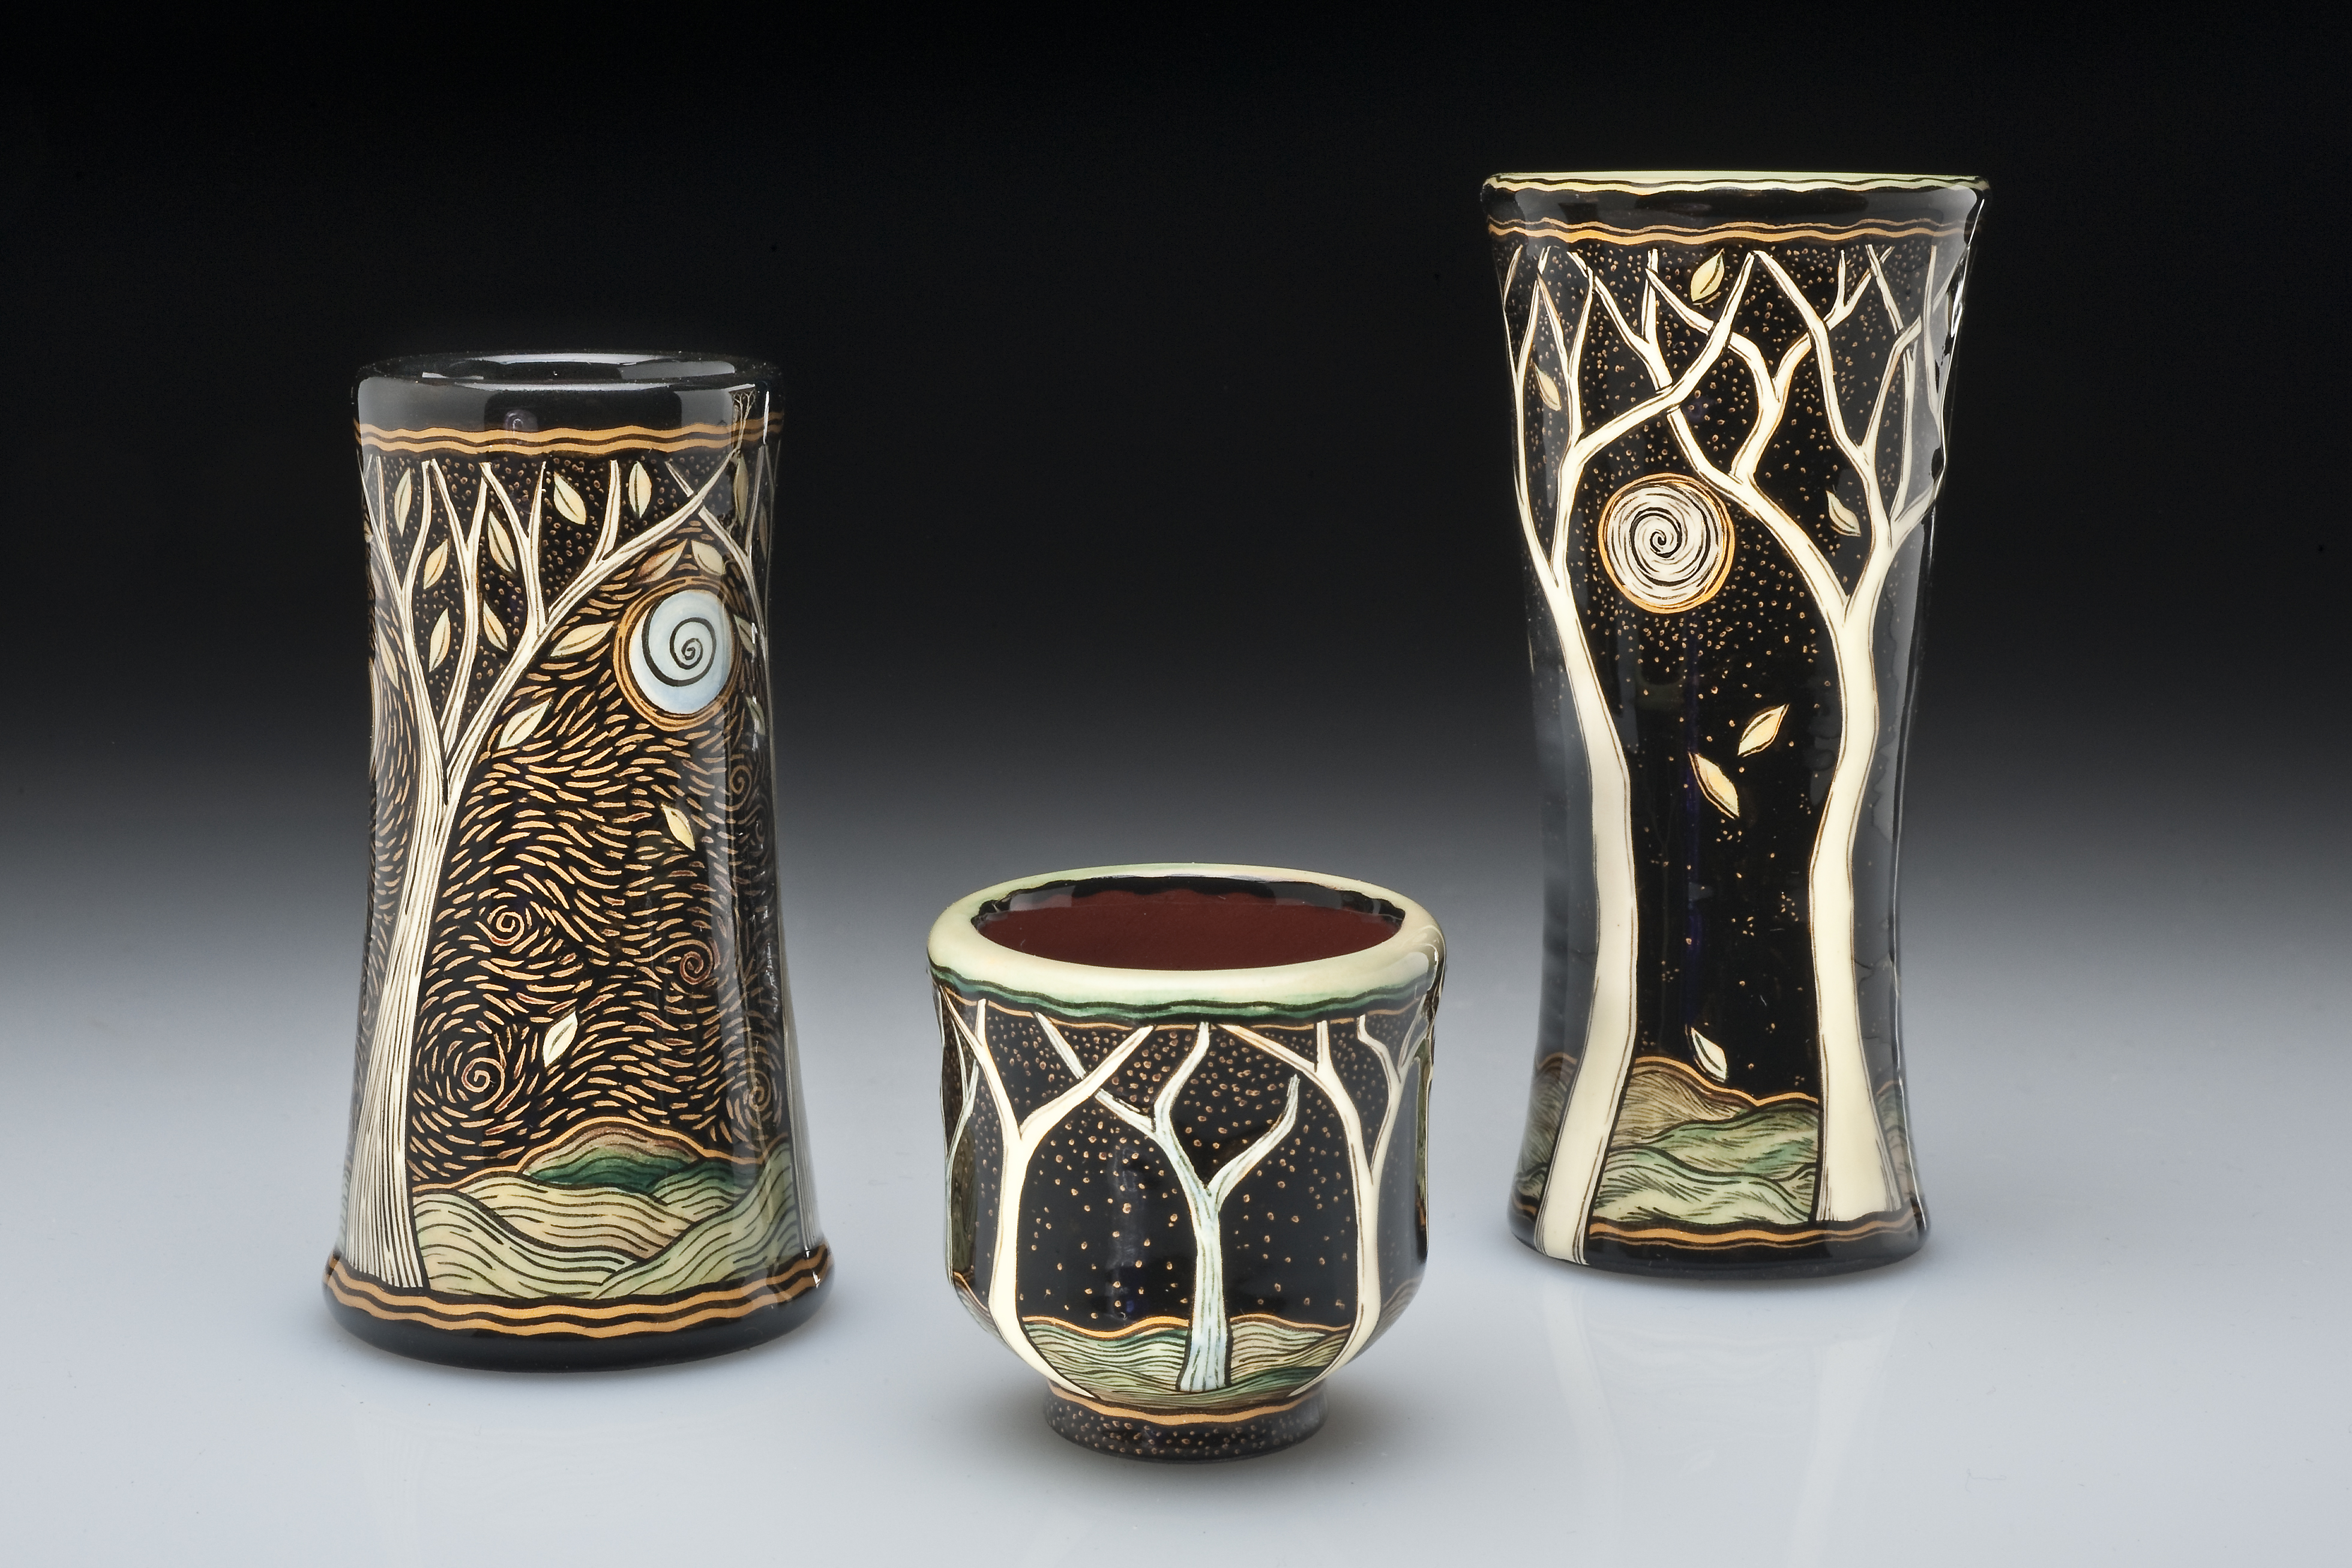 Decorated ceramic mugs by Terri Kern